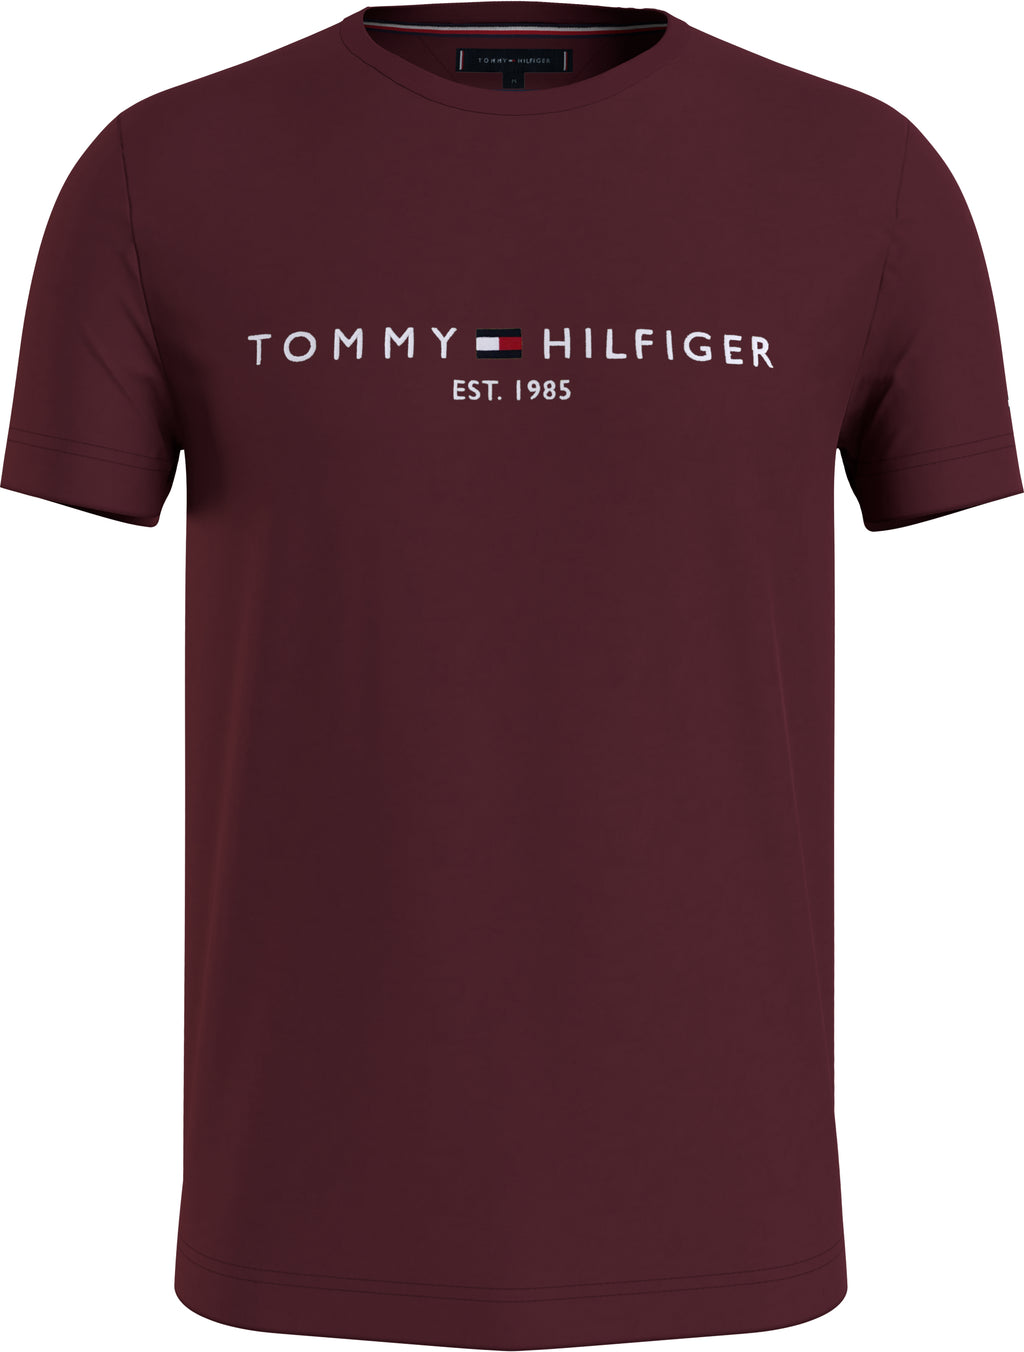 T-Shirt logo poitrine Tommy Hilfiger bordeaux  | Georgespaul